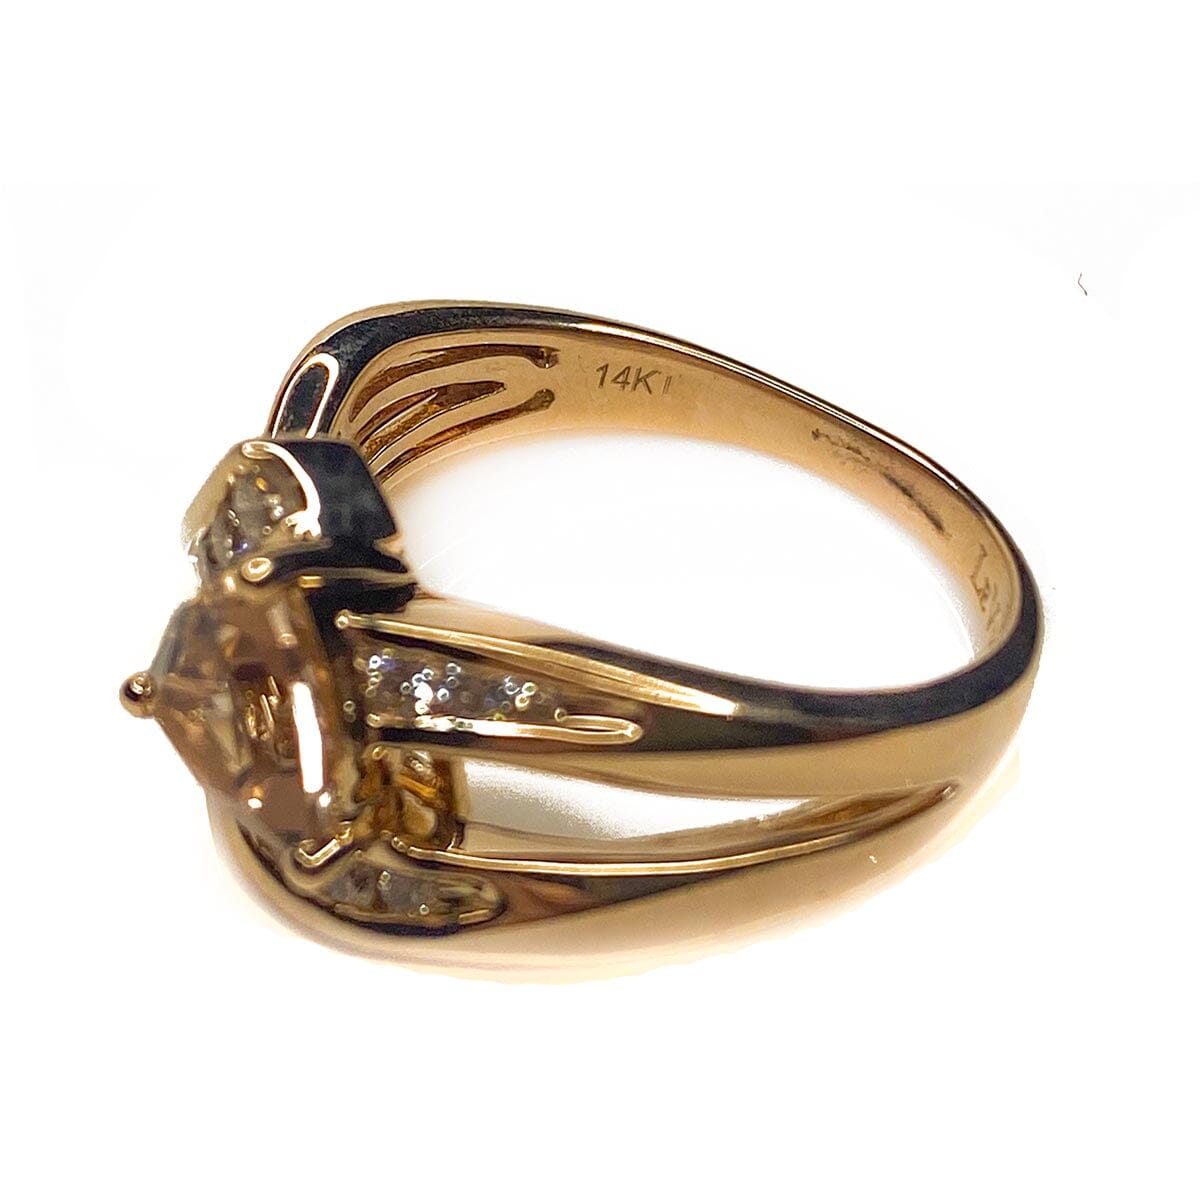 Great Lakes Boutique Le Vian 14 k Rose Gold Morganite &amp; Diamond Ring